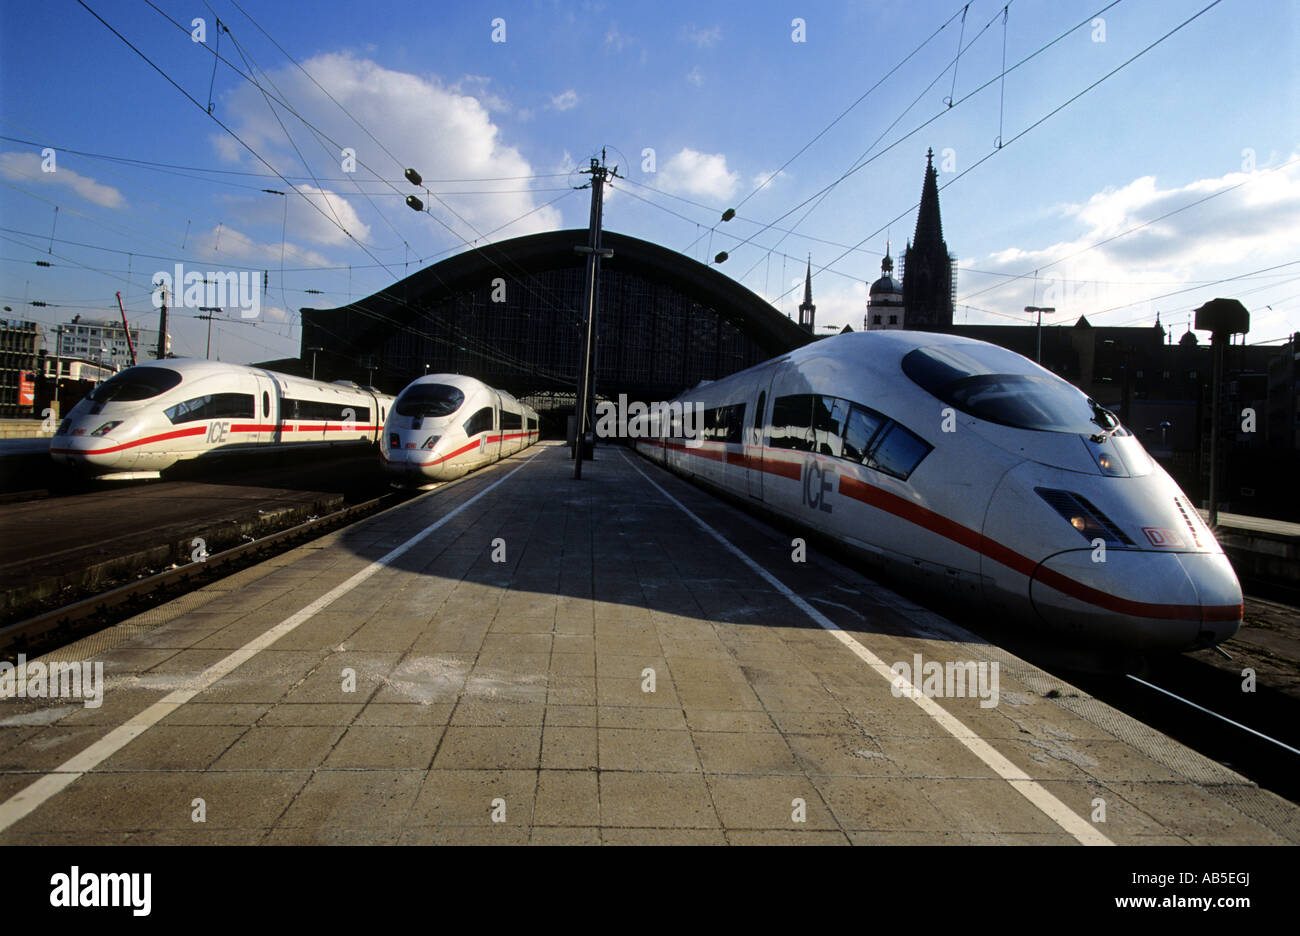 German railways Inter-city express passenger trains at Cologne's Hauptbahnhof or Central station, North Rhine-Westphalia, German Stock Photo